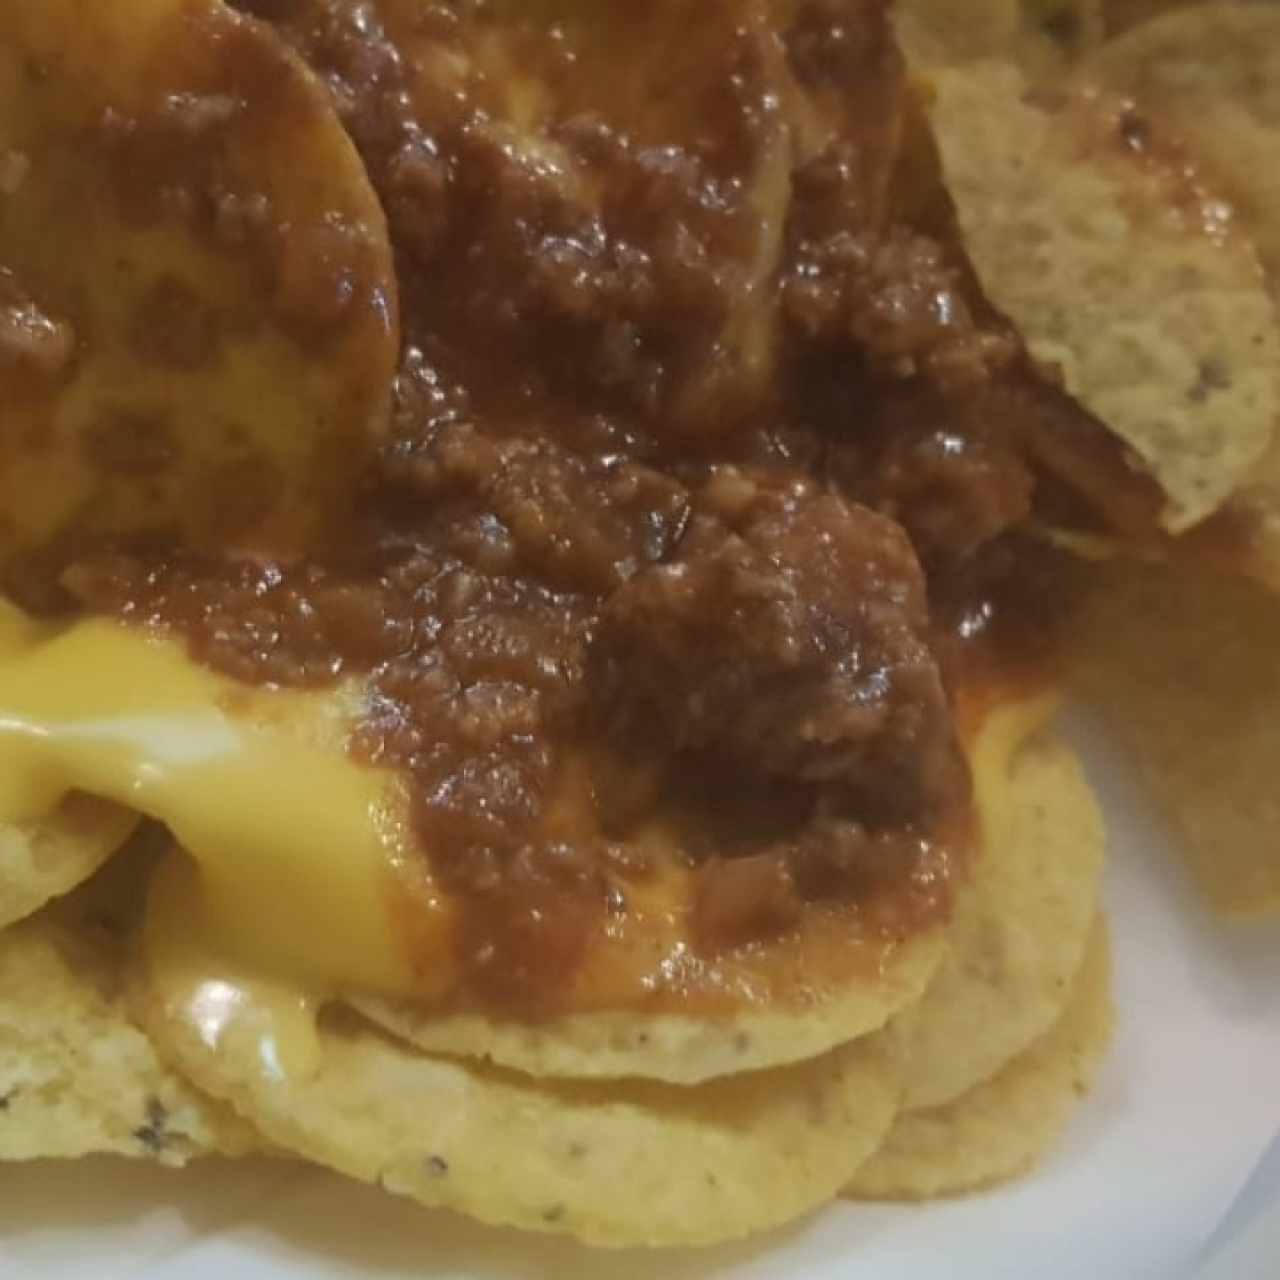 nachos con chili y queso